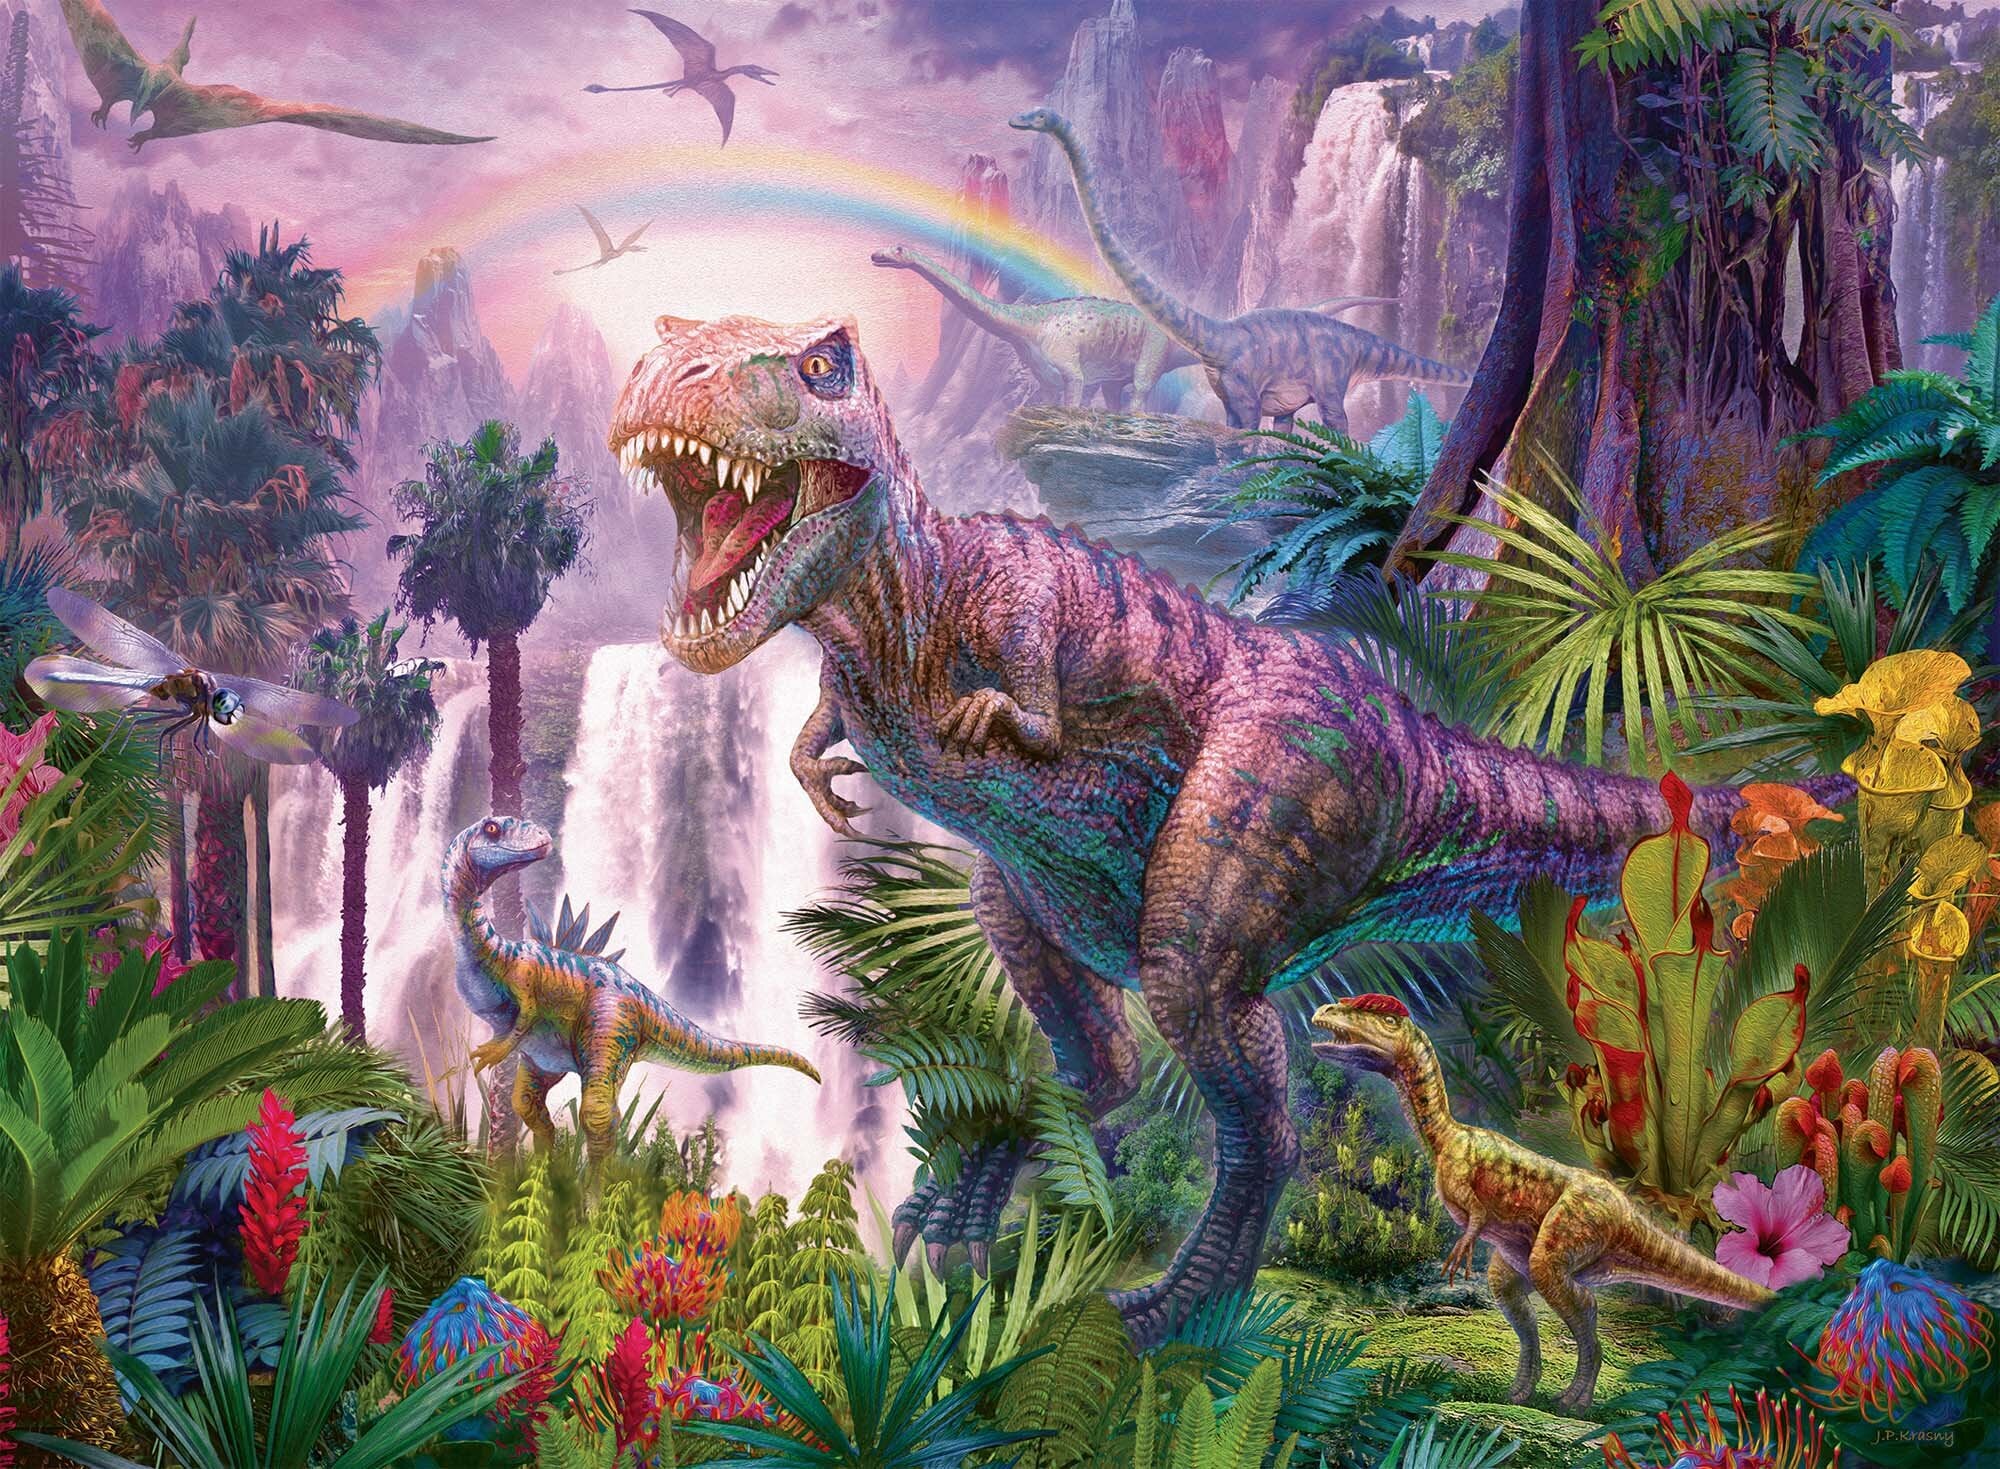 Ravensburger Puzzel - Land van de Dinosaurussen 200 stukjes XXL